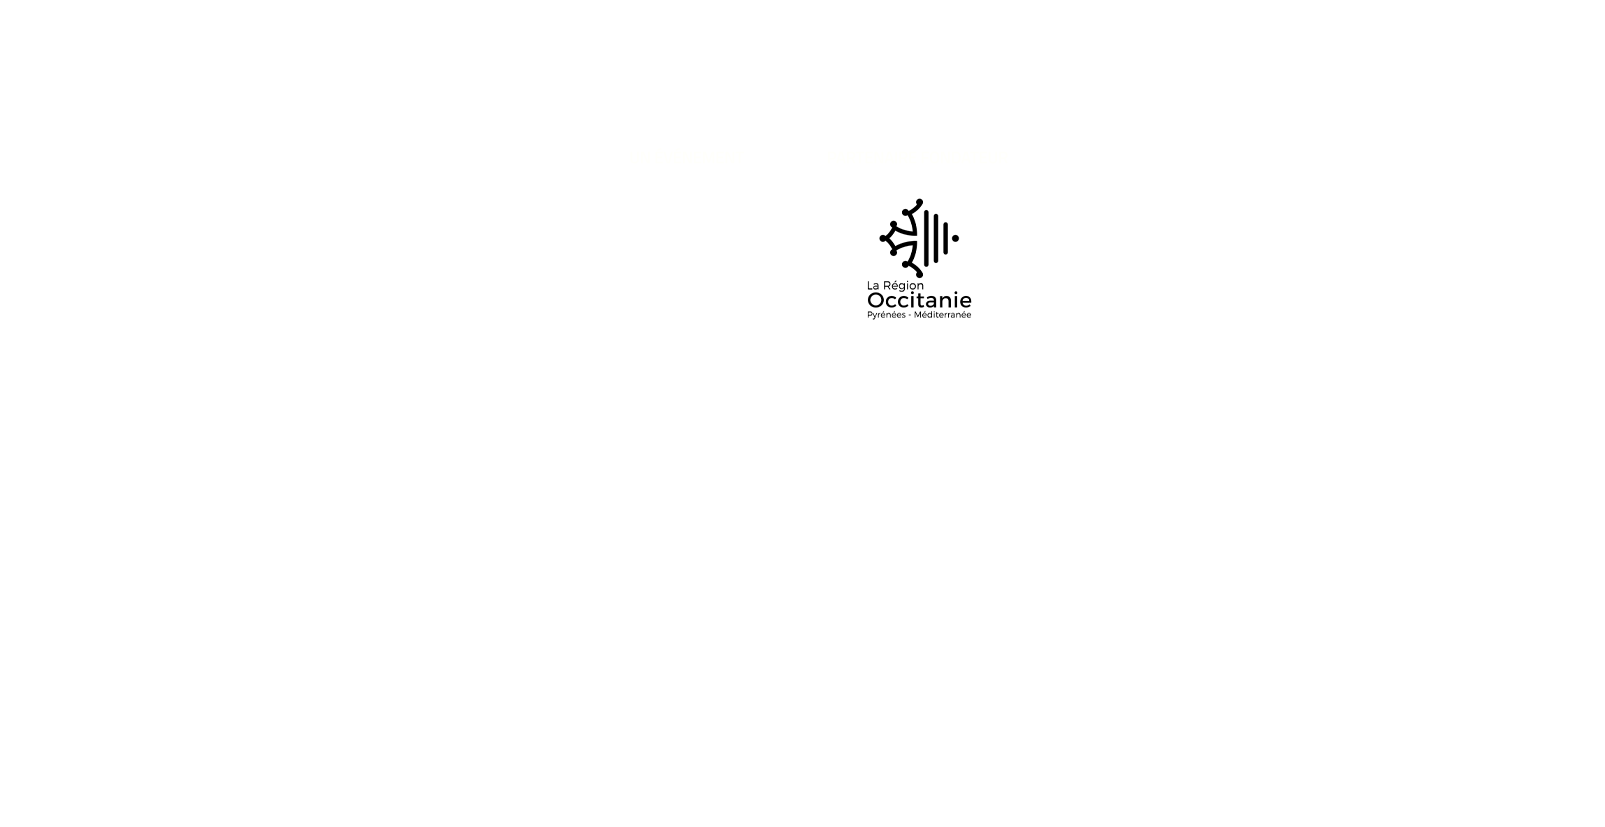 The village LT